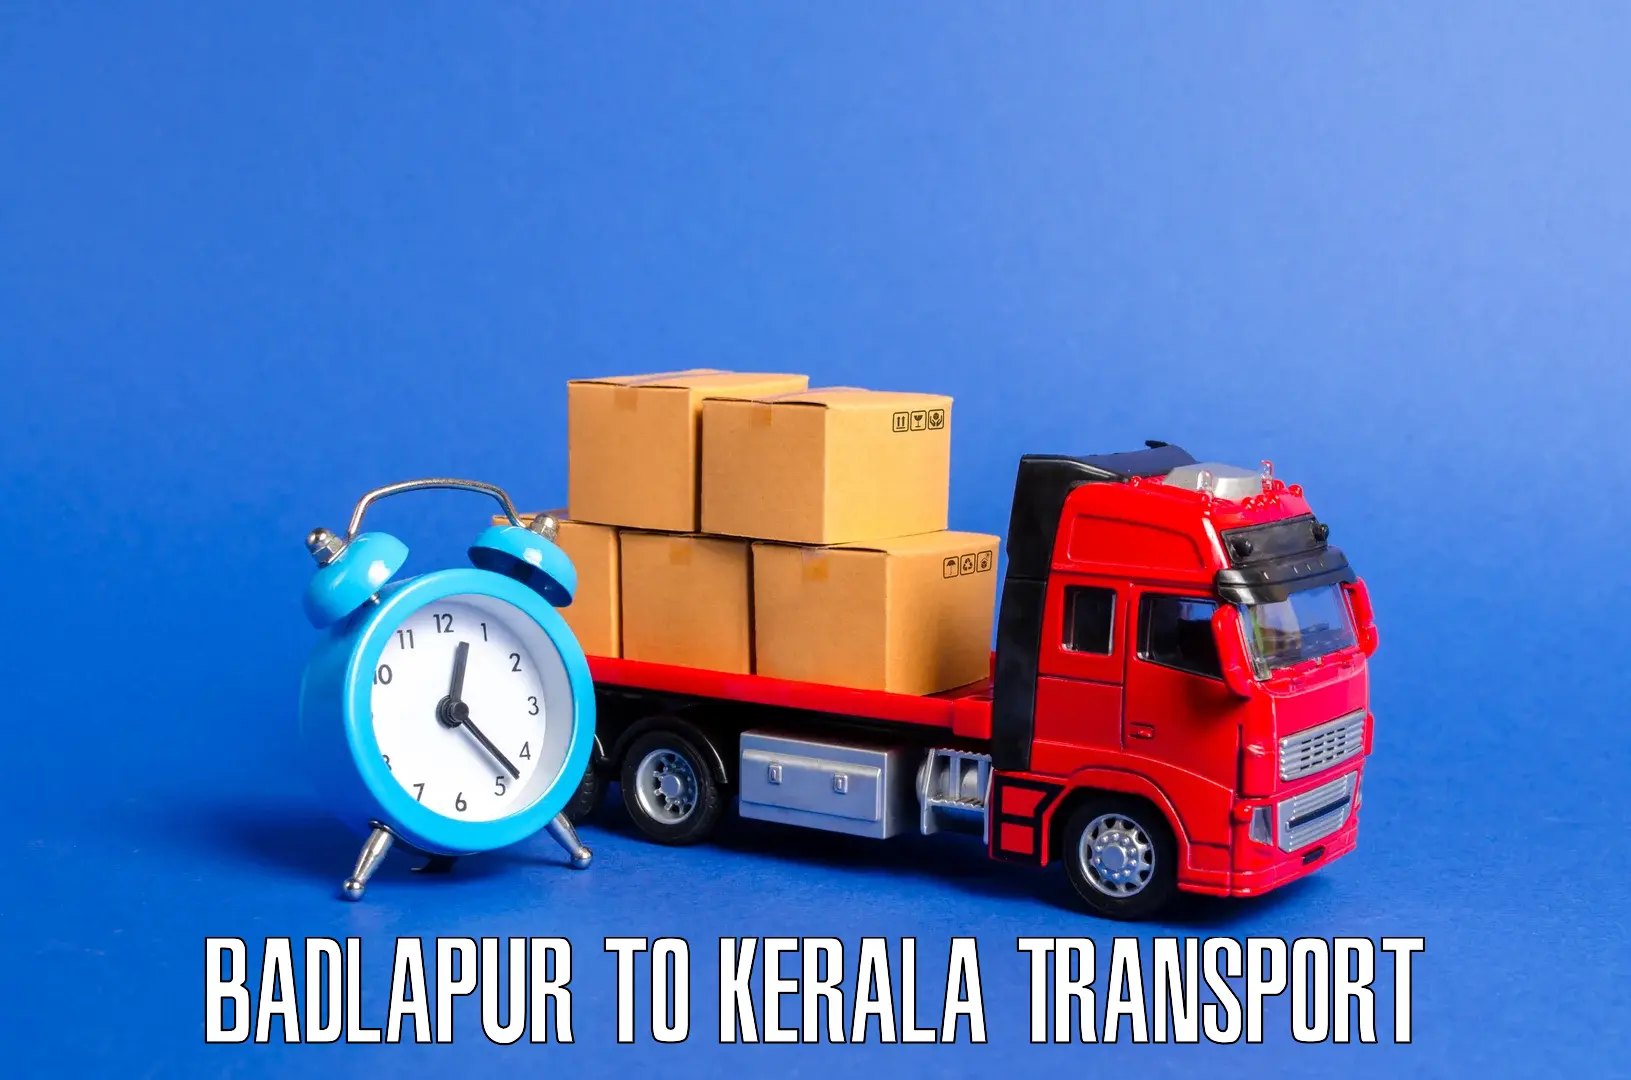 Online transport service Badlapur to Munnar